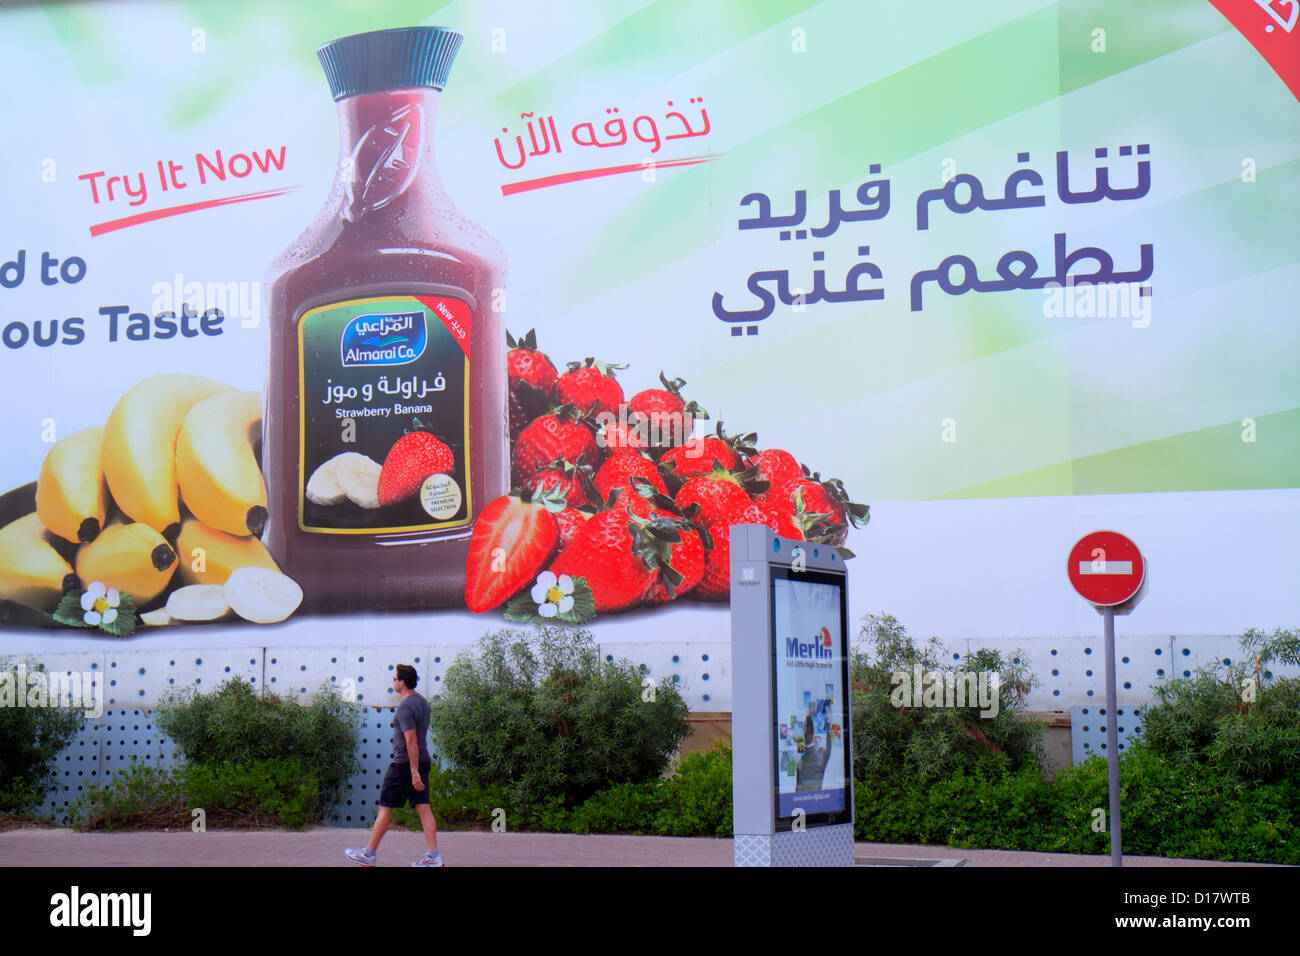 Dubai UAE,United Arab Emirates,Trade Centre,Sheikh Zayed Road,billboard,advertisement,ad,advertisement,English,Arabic,language,bilingual,fruit juice d Stock Photo